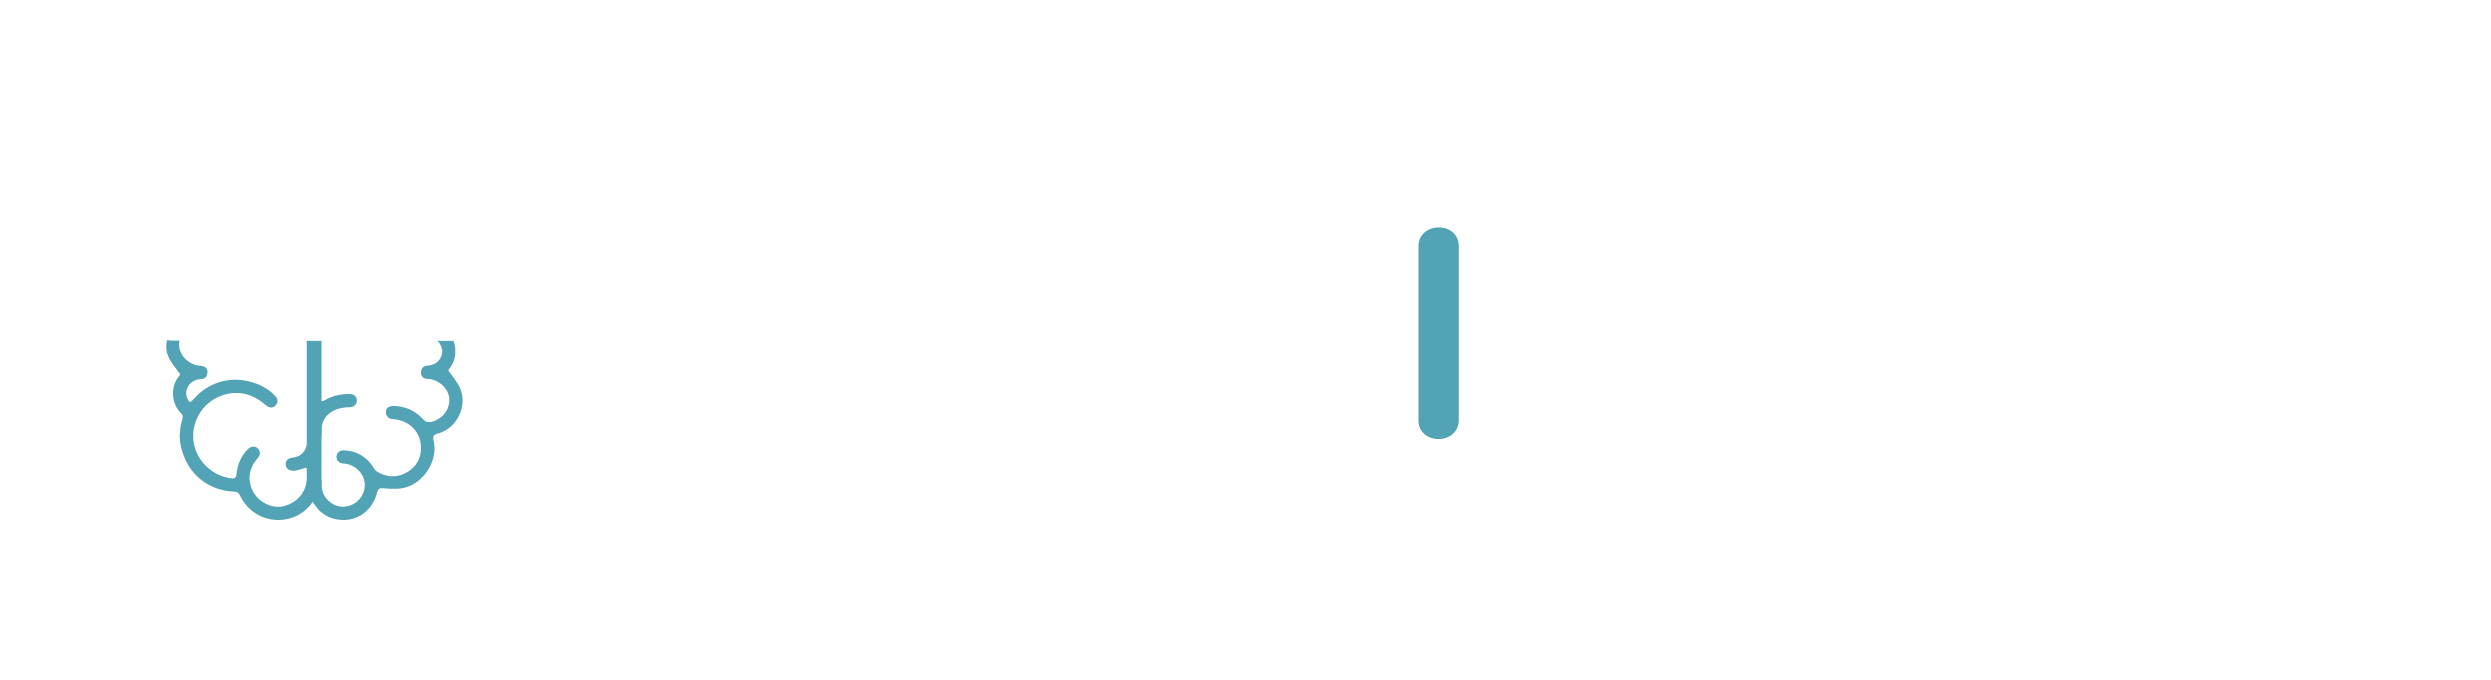 Mindicity-Logo_Negativo